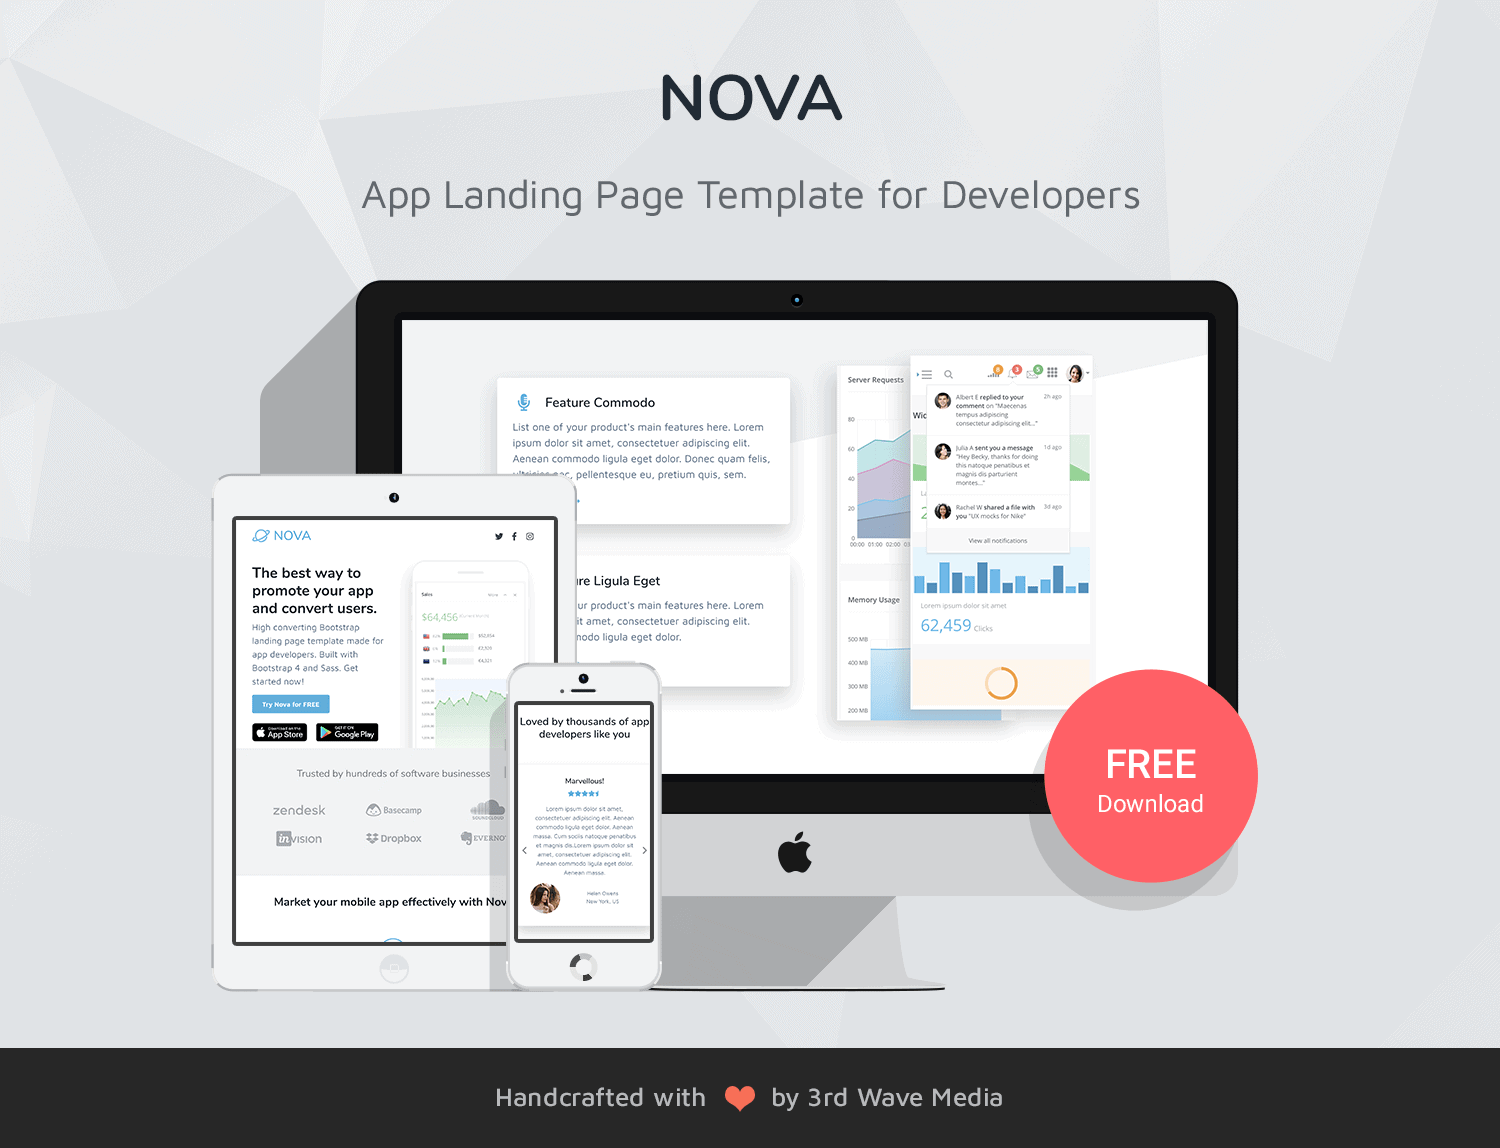 Free-Bootstrap-Mobile-App-Landing-Page-Template-Nova